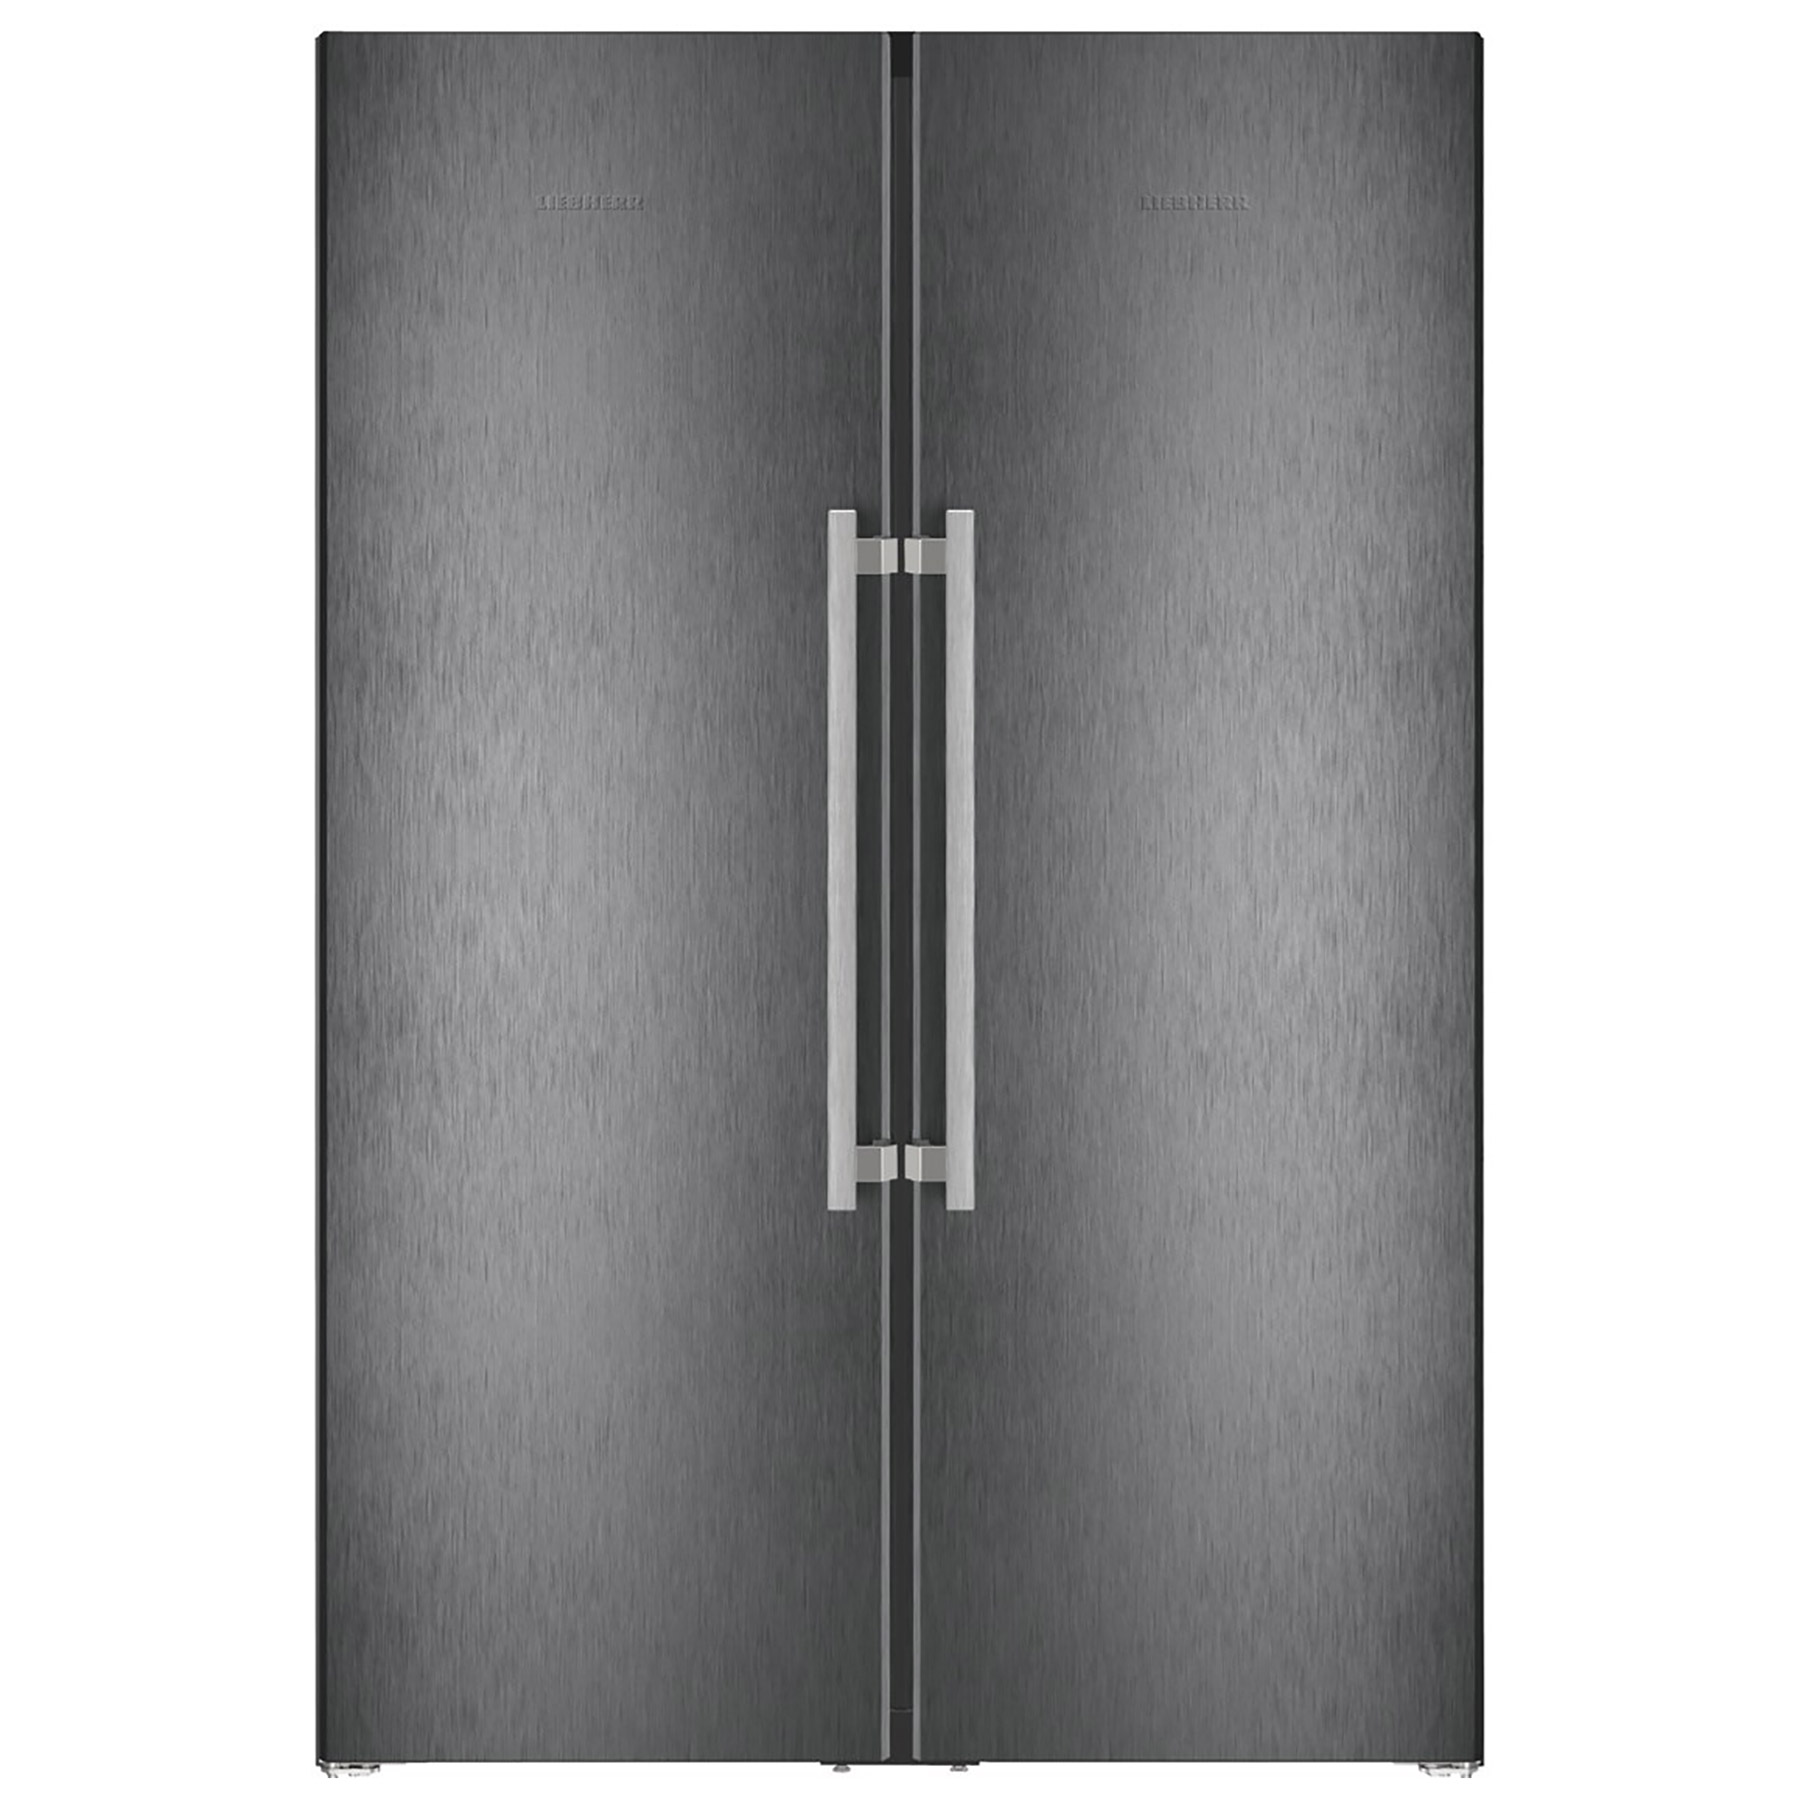 Image of Liebherr XRFBS5295 American Fridge Freezer in Black PL I W D Rated